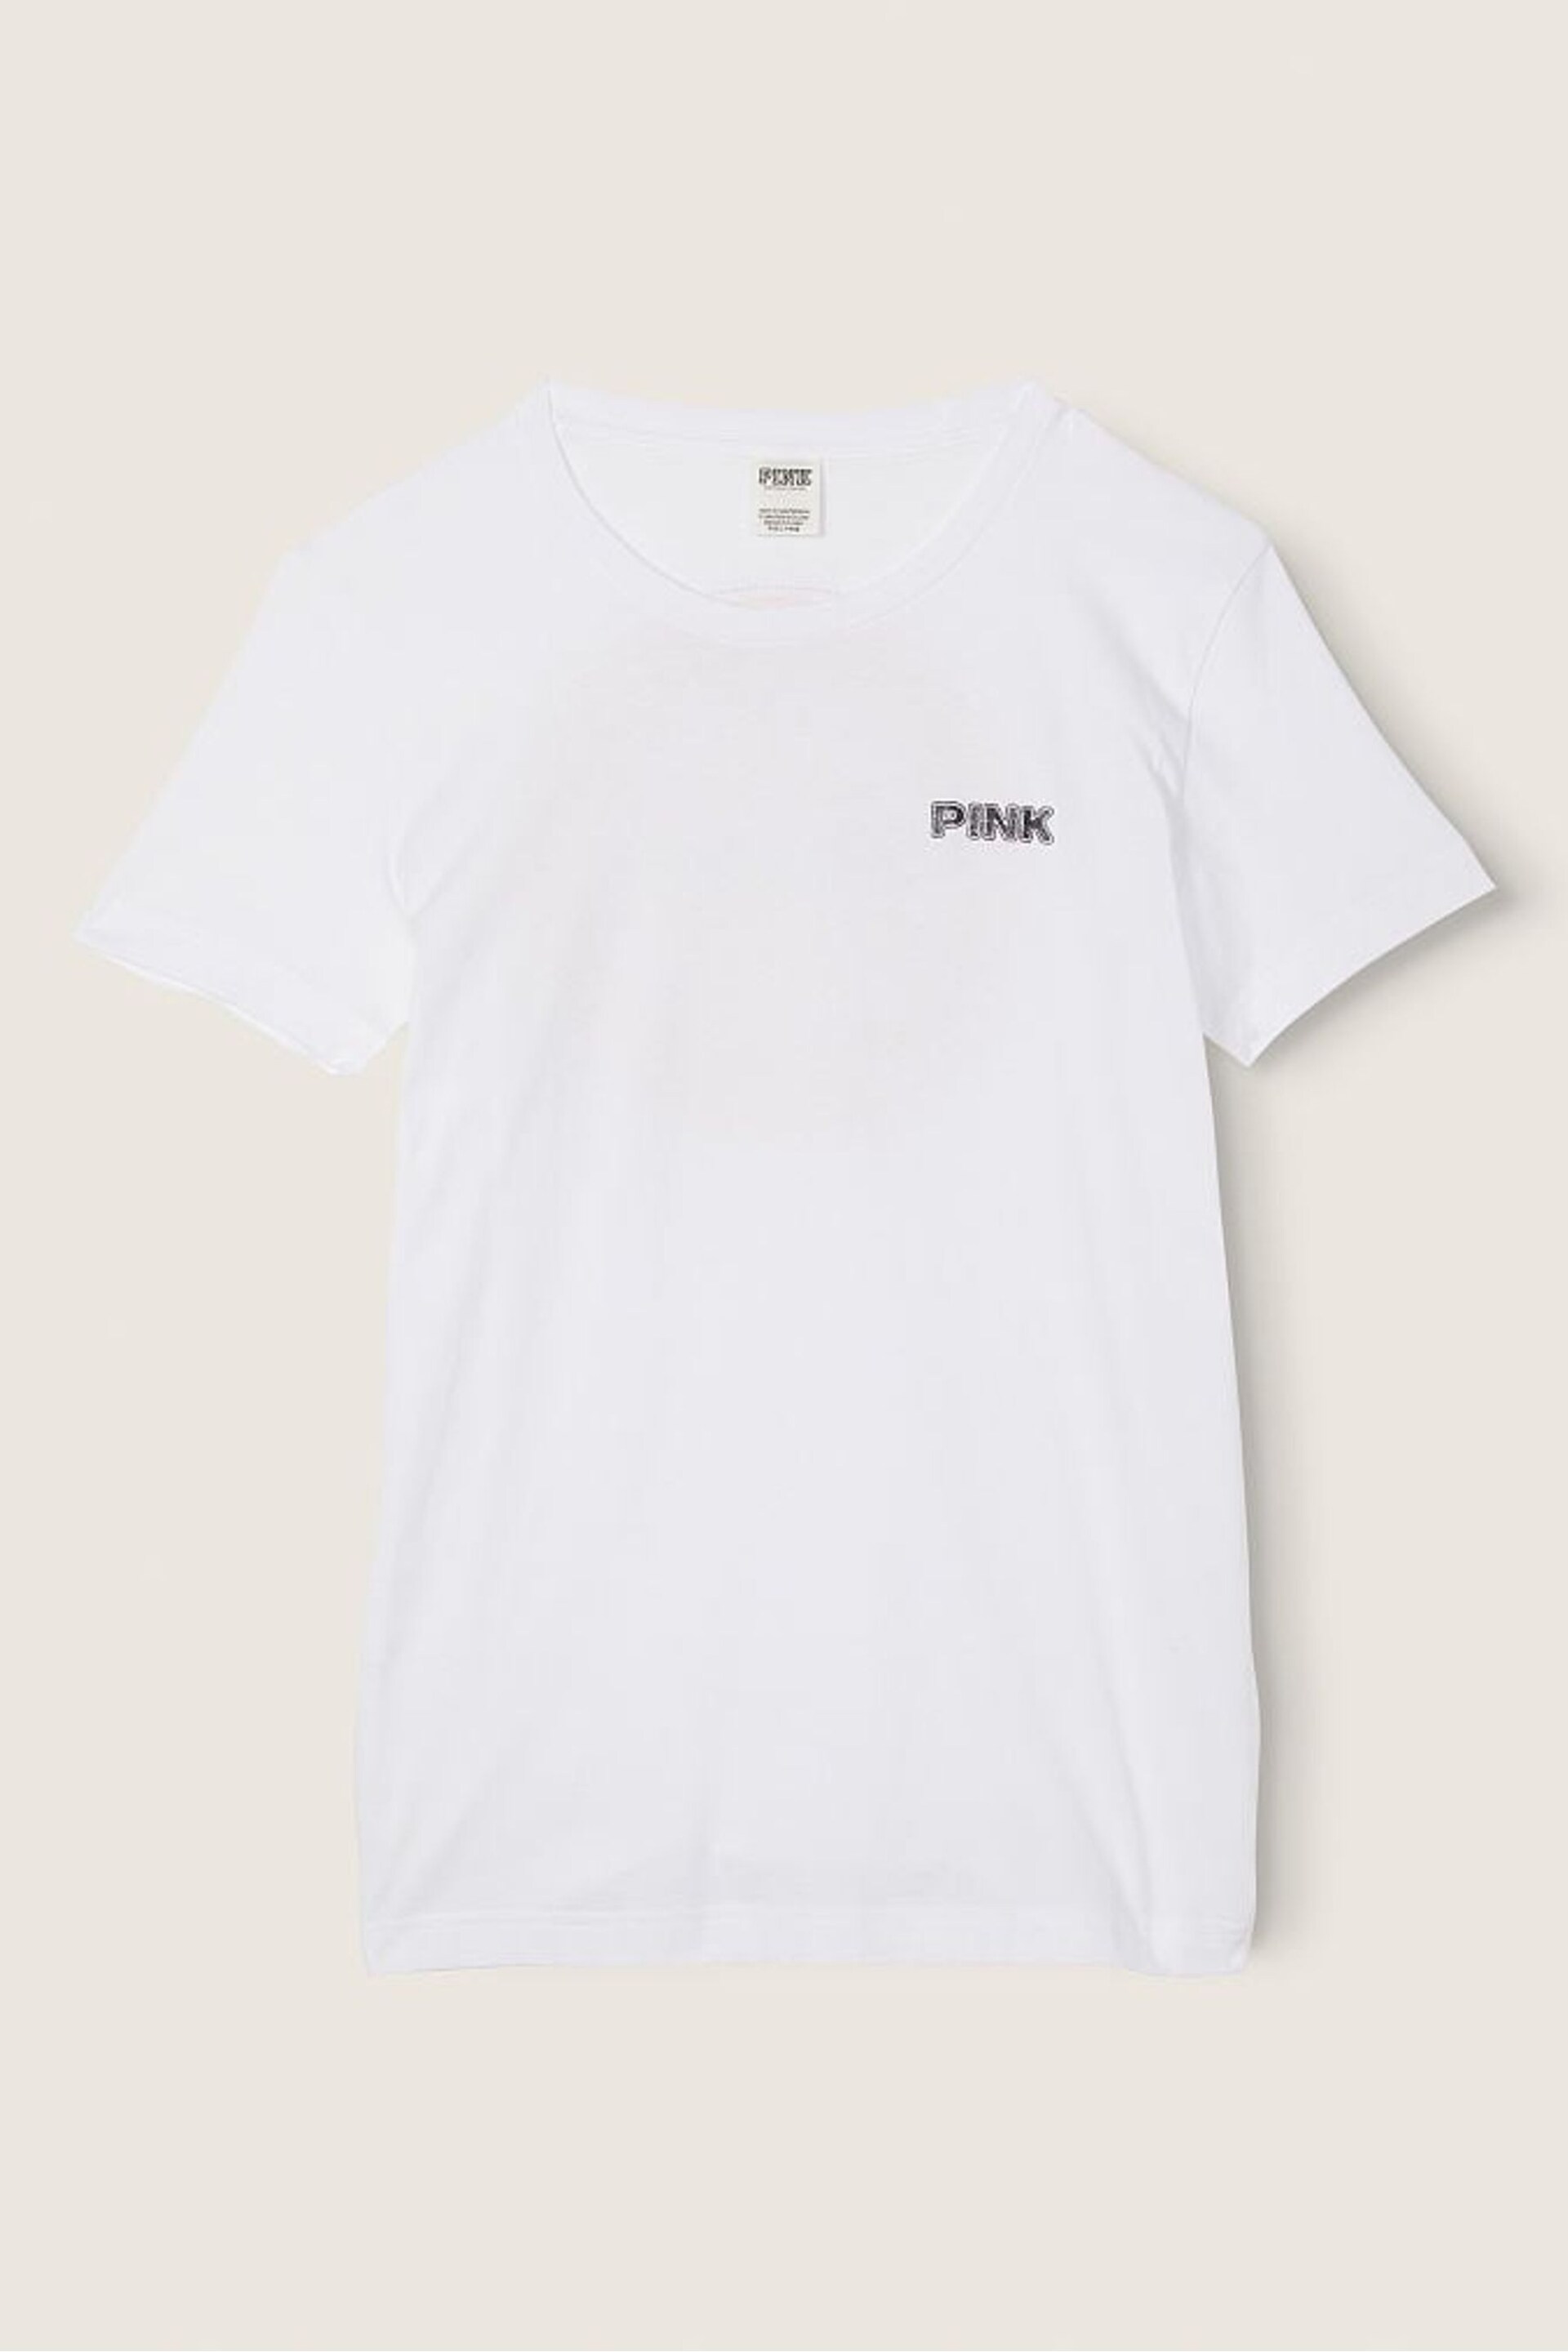 Victoria's Secret PINK Optic White Short Sleeve T-Shirt - Image 3 of 5